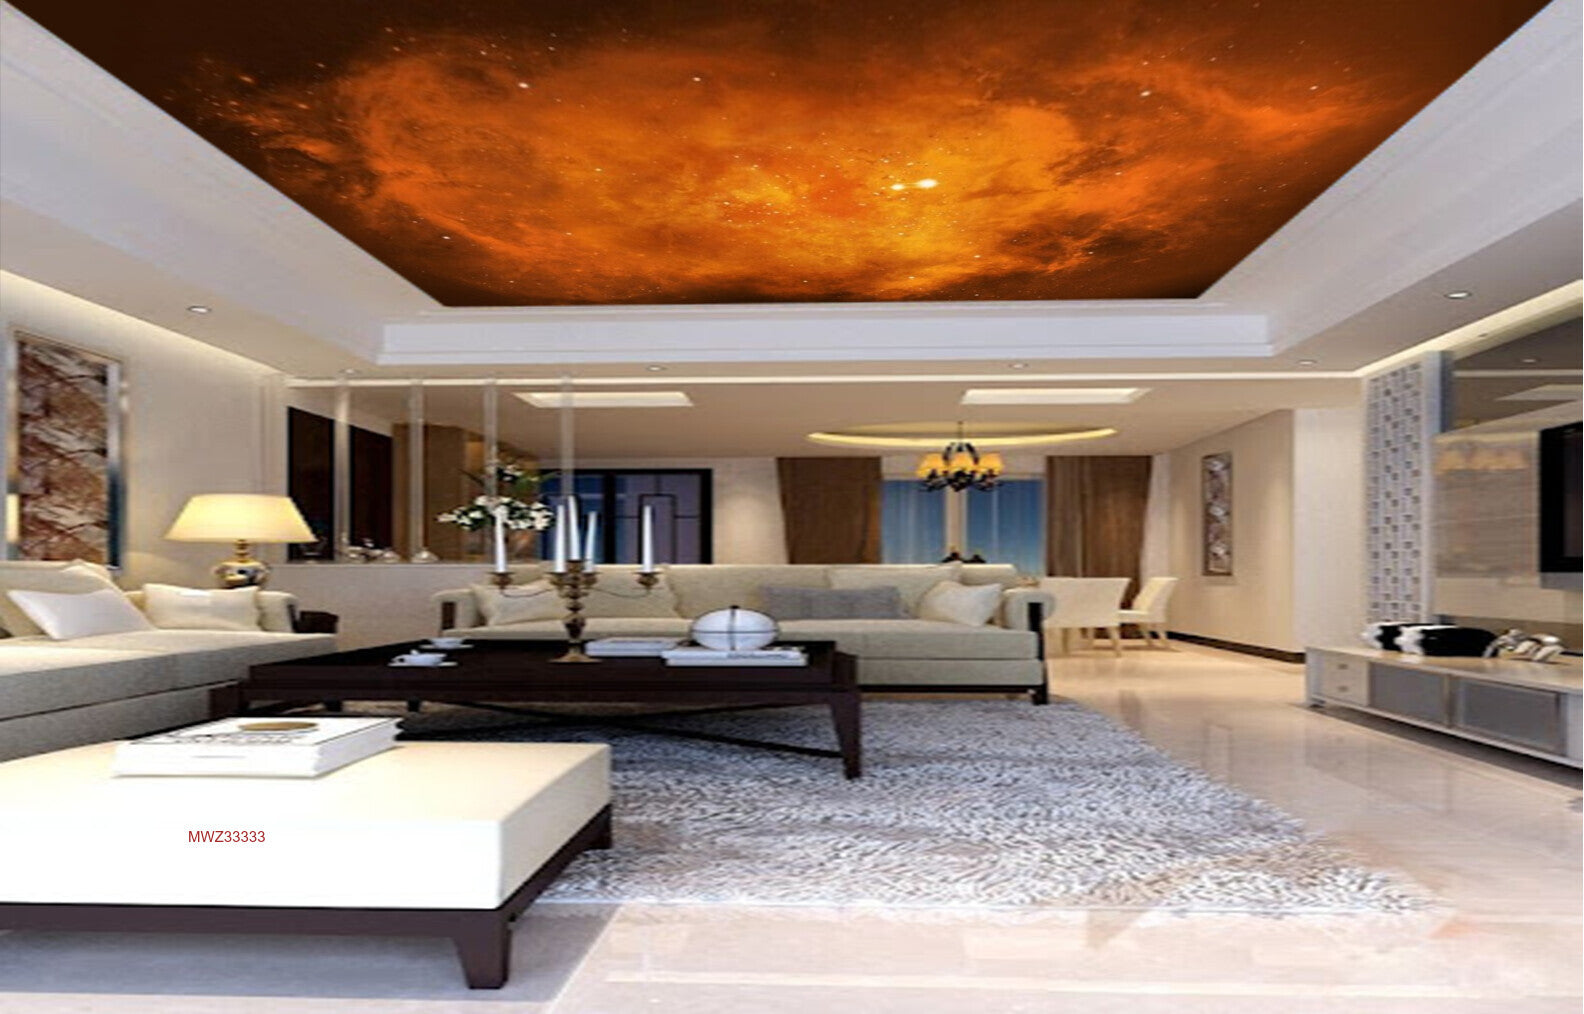 Avikalp MWZ3333 Galaxy Orange Sun Stars HD Wallpaper for Ceiling